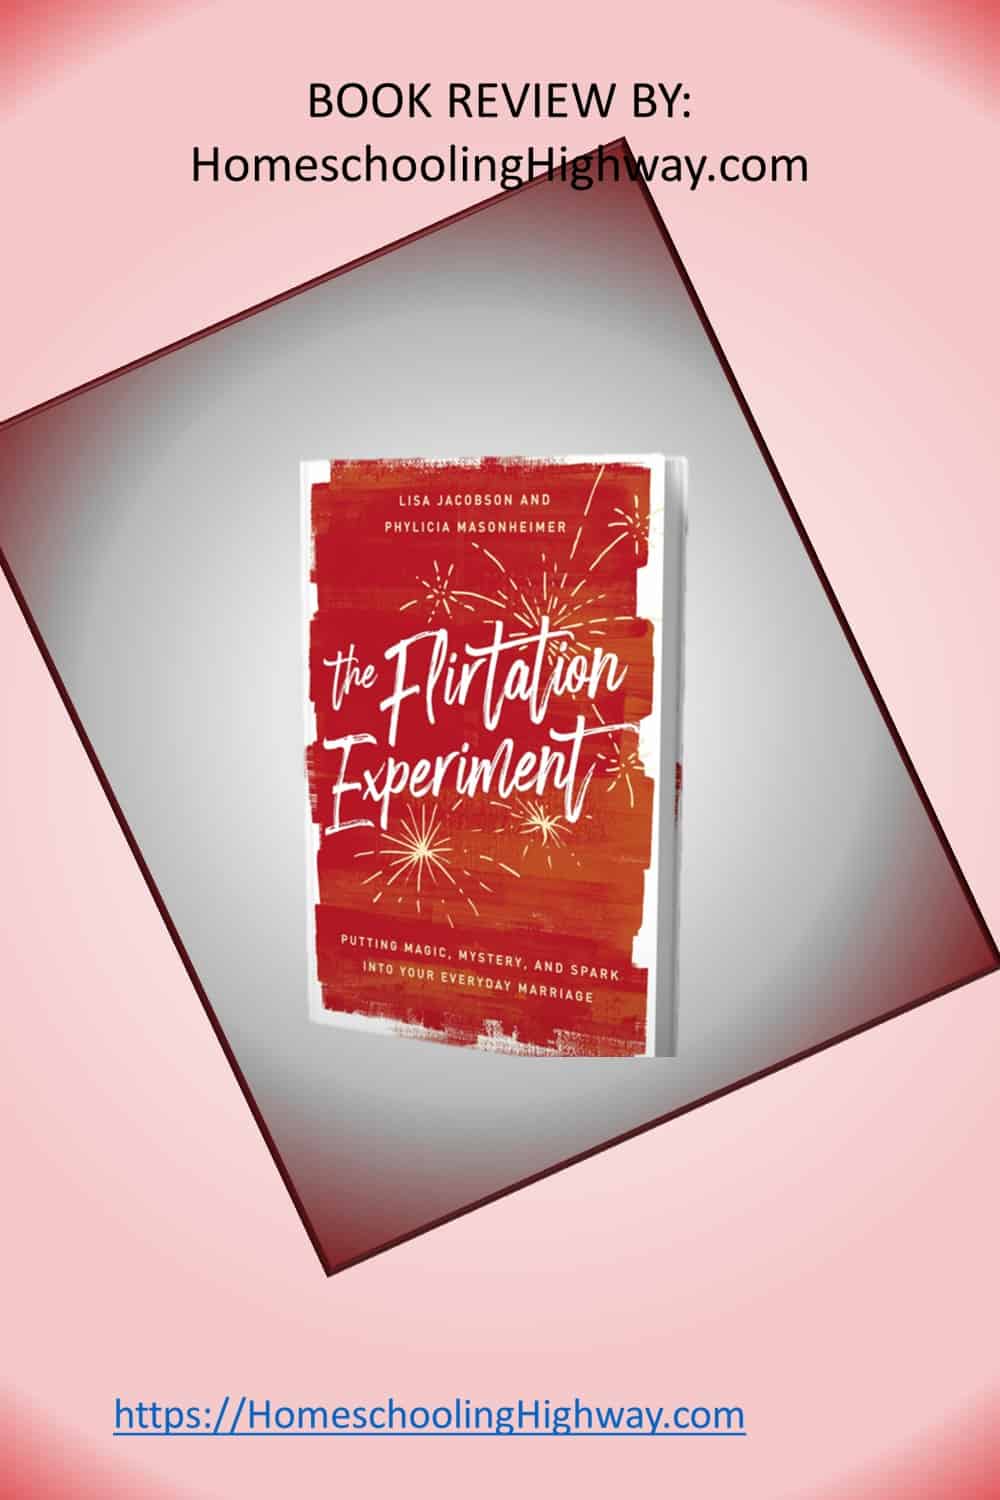 Book Review of The Flirtation Experiment by HomeschoolingHighway.com